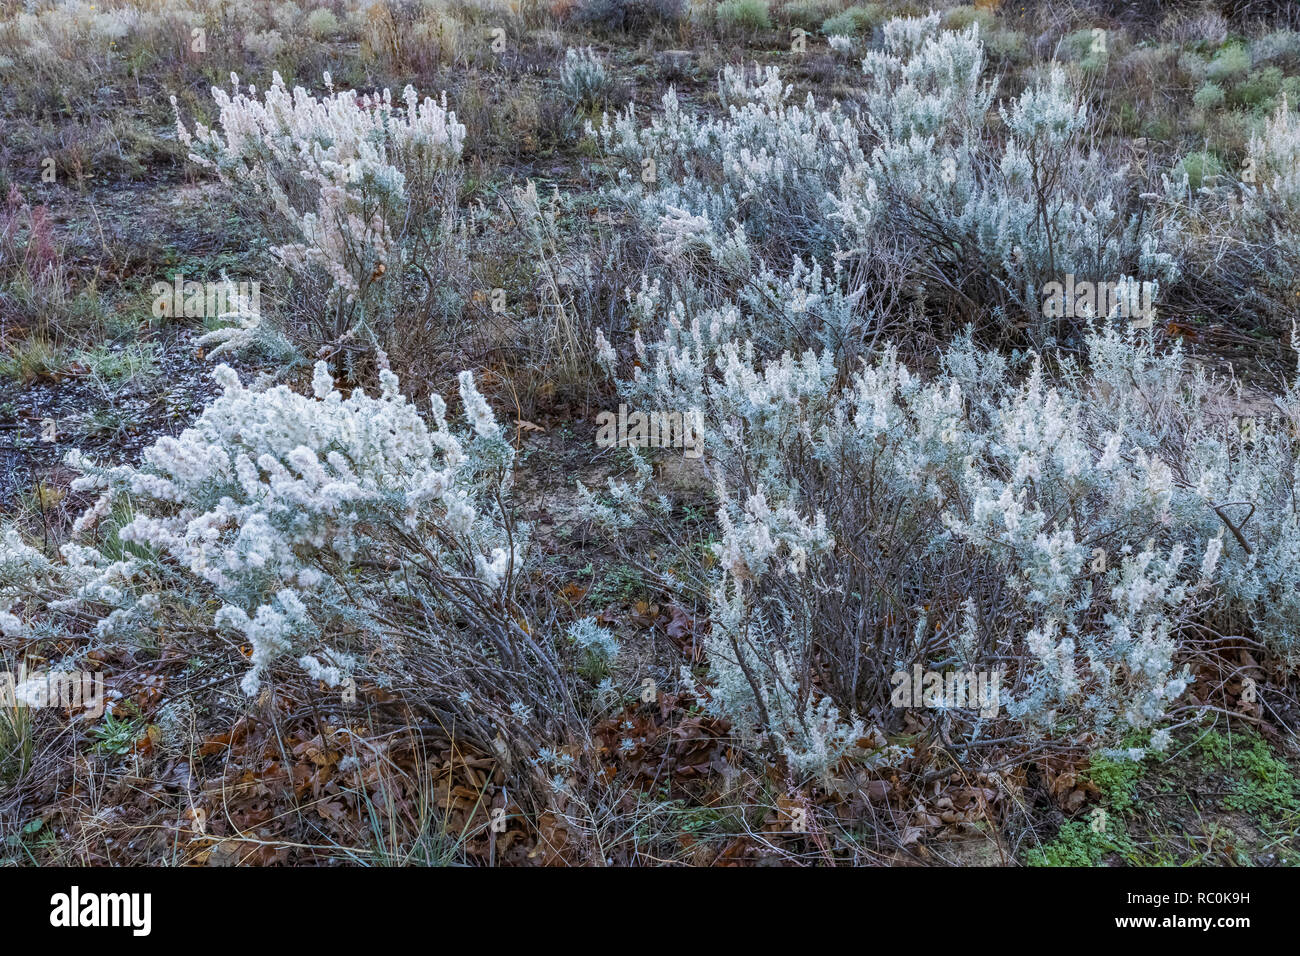 Winterfat, Eurotia lanata, a good wildlife browse shrub, growing near the start of the Mesa Top Trail in El Morro National Monument, New Mexico, USA Stock Photo